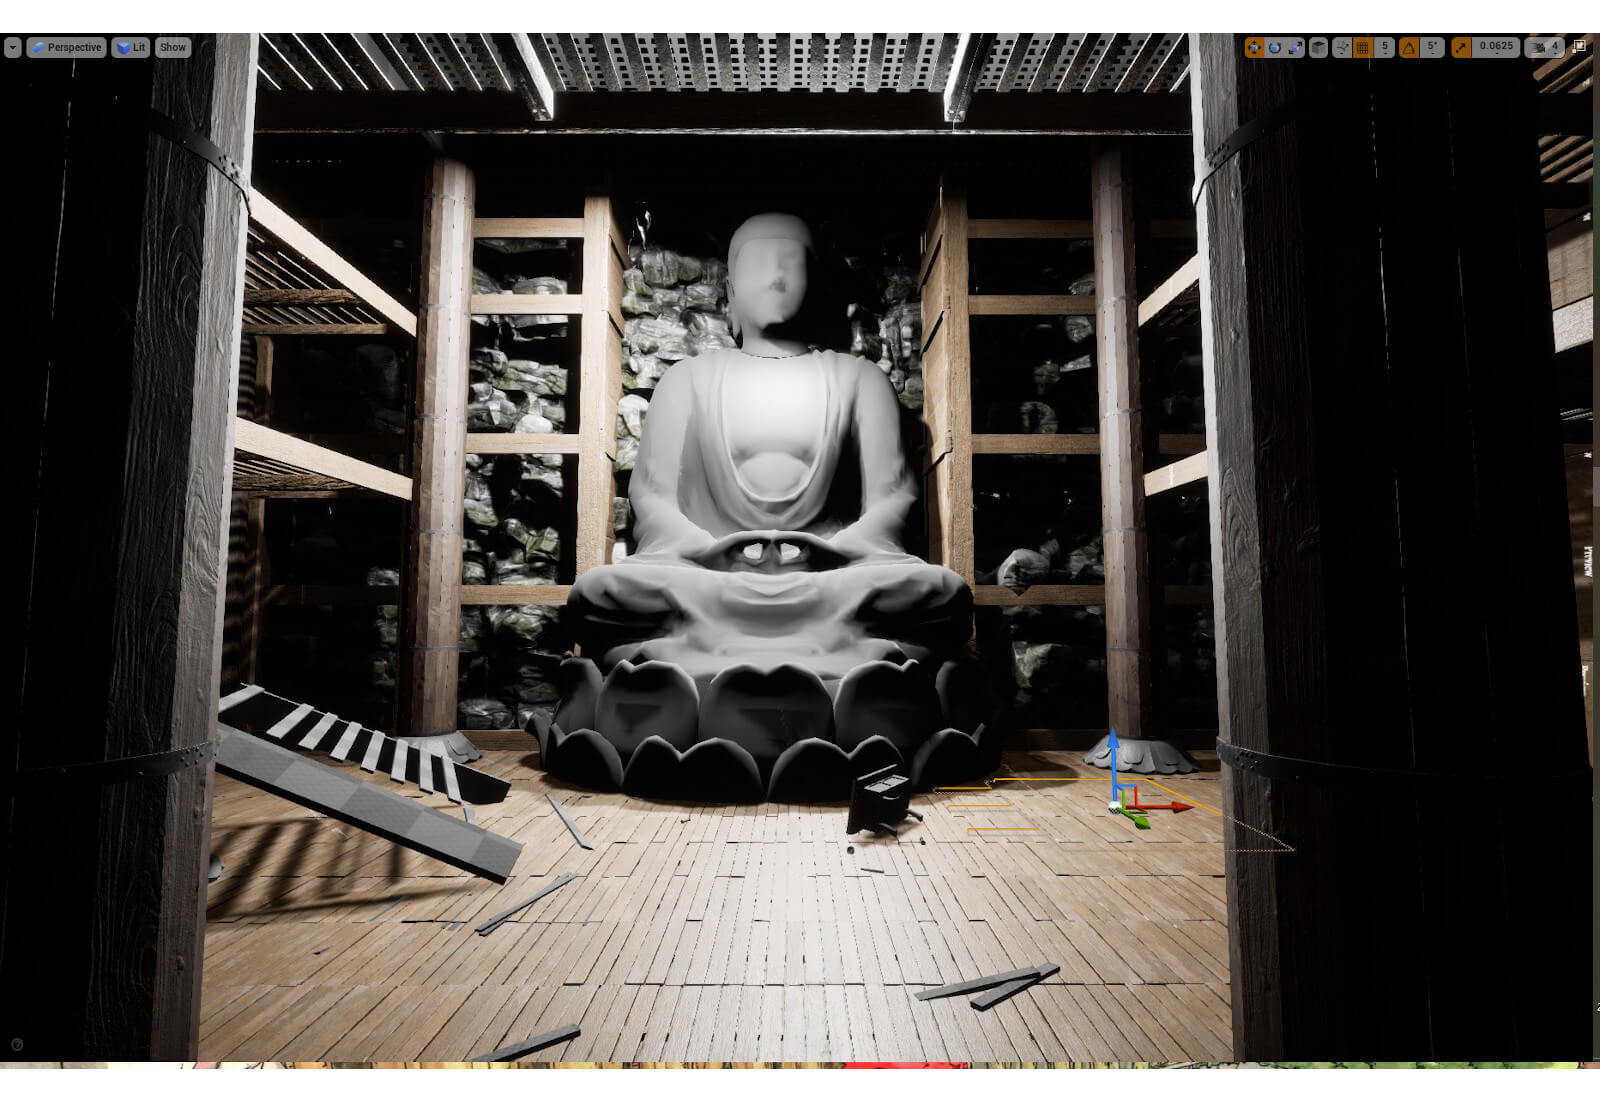 3D temple environment model in progress